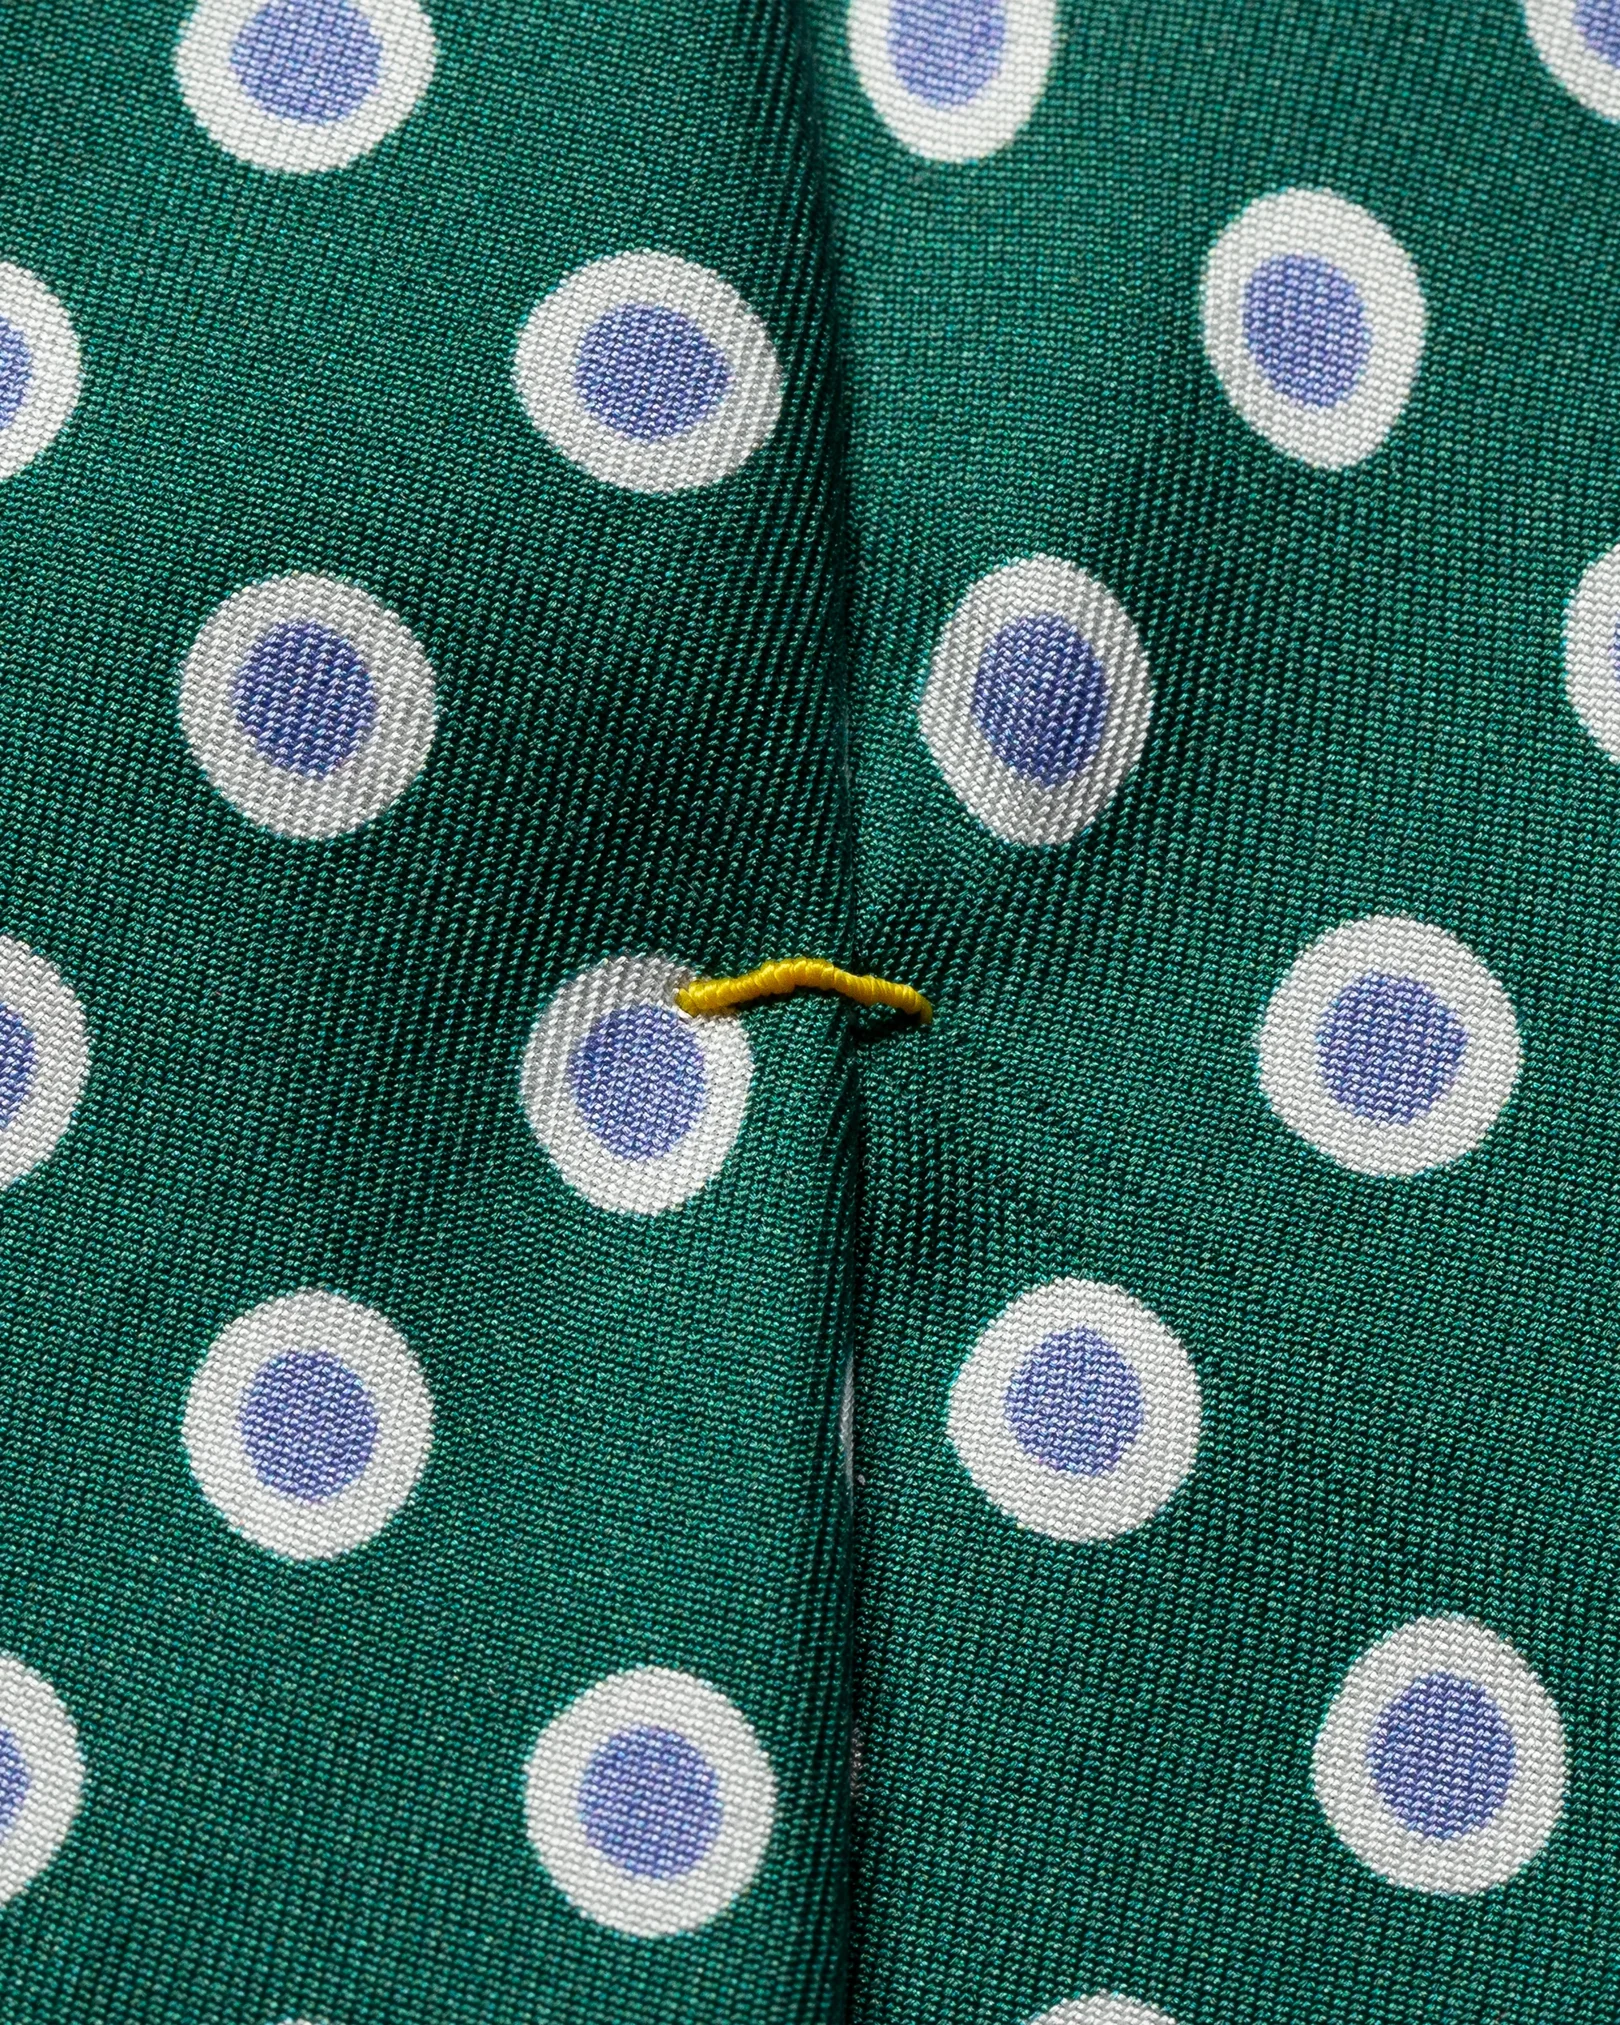 Eton - dark green patterned silk tie geomatric